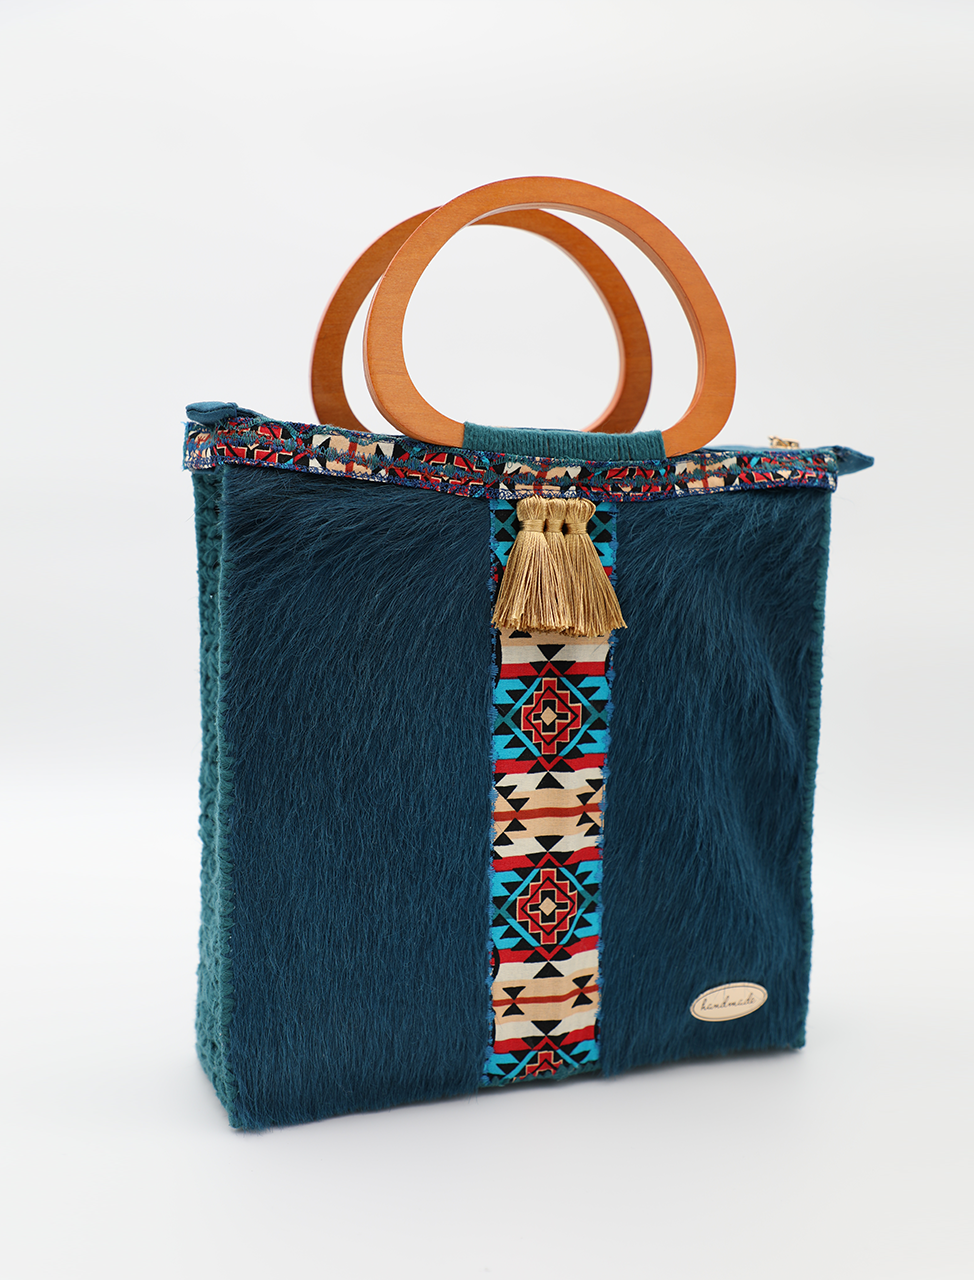 Chic Western Elegance: Teal Blue Handcrafted Handbags by Meryarts with Stylish Zipper Detail